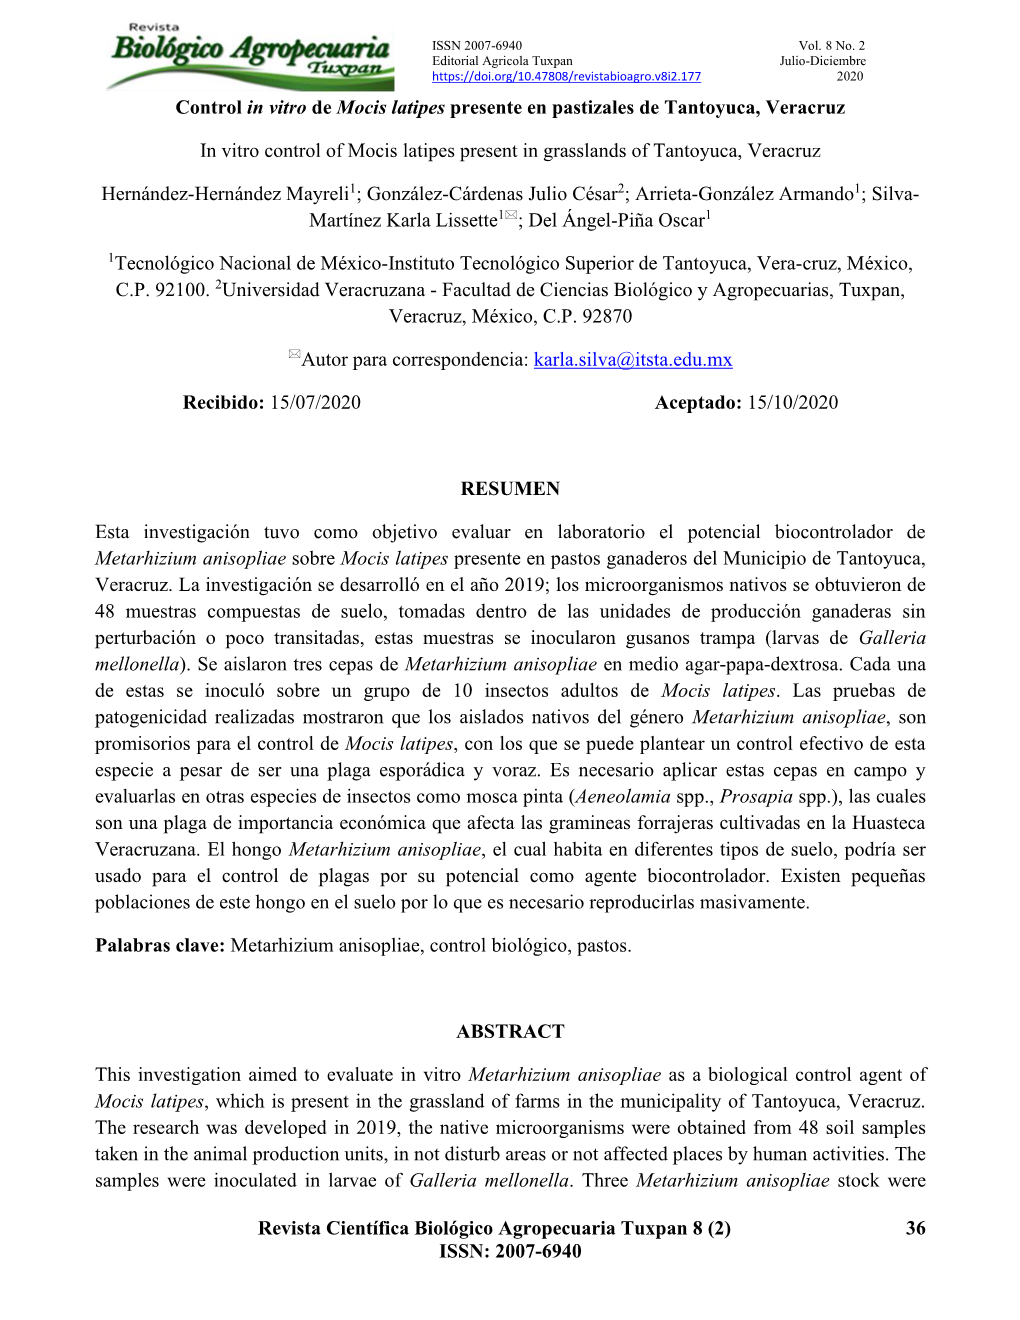 Revista Científica Biológico Agropecuaria Tuxpan 8 (2) 36 ISSN: 2007-6940 Hernández-Hernández Et Al., 2020 Isolated in Potato-Dextrose-Agar Medium